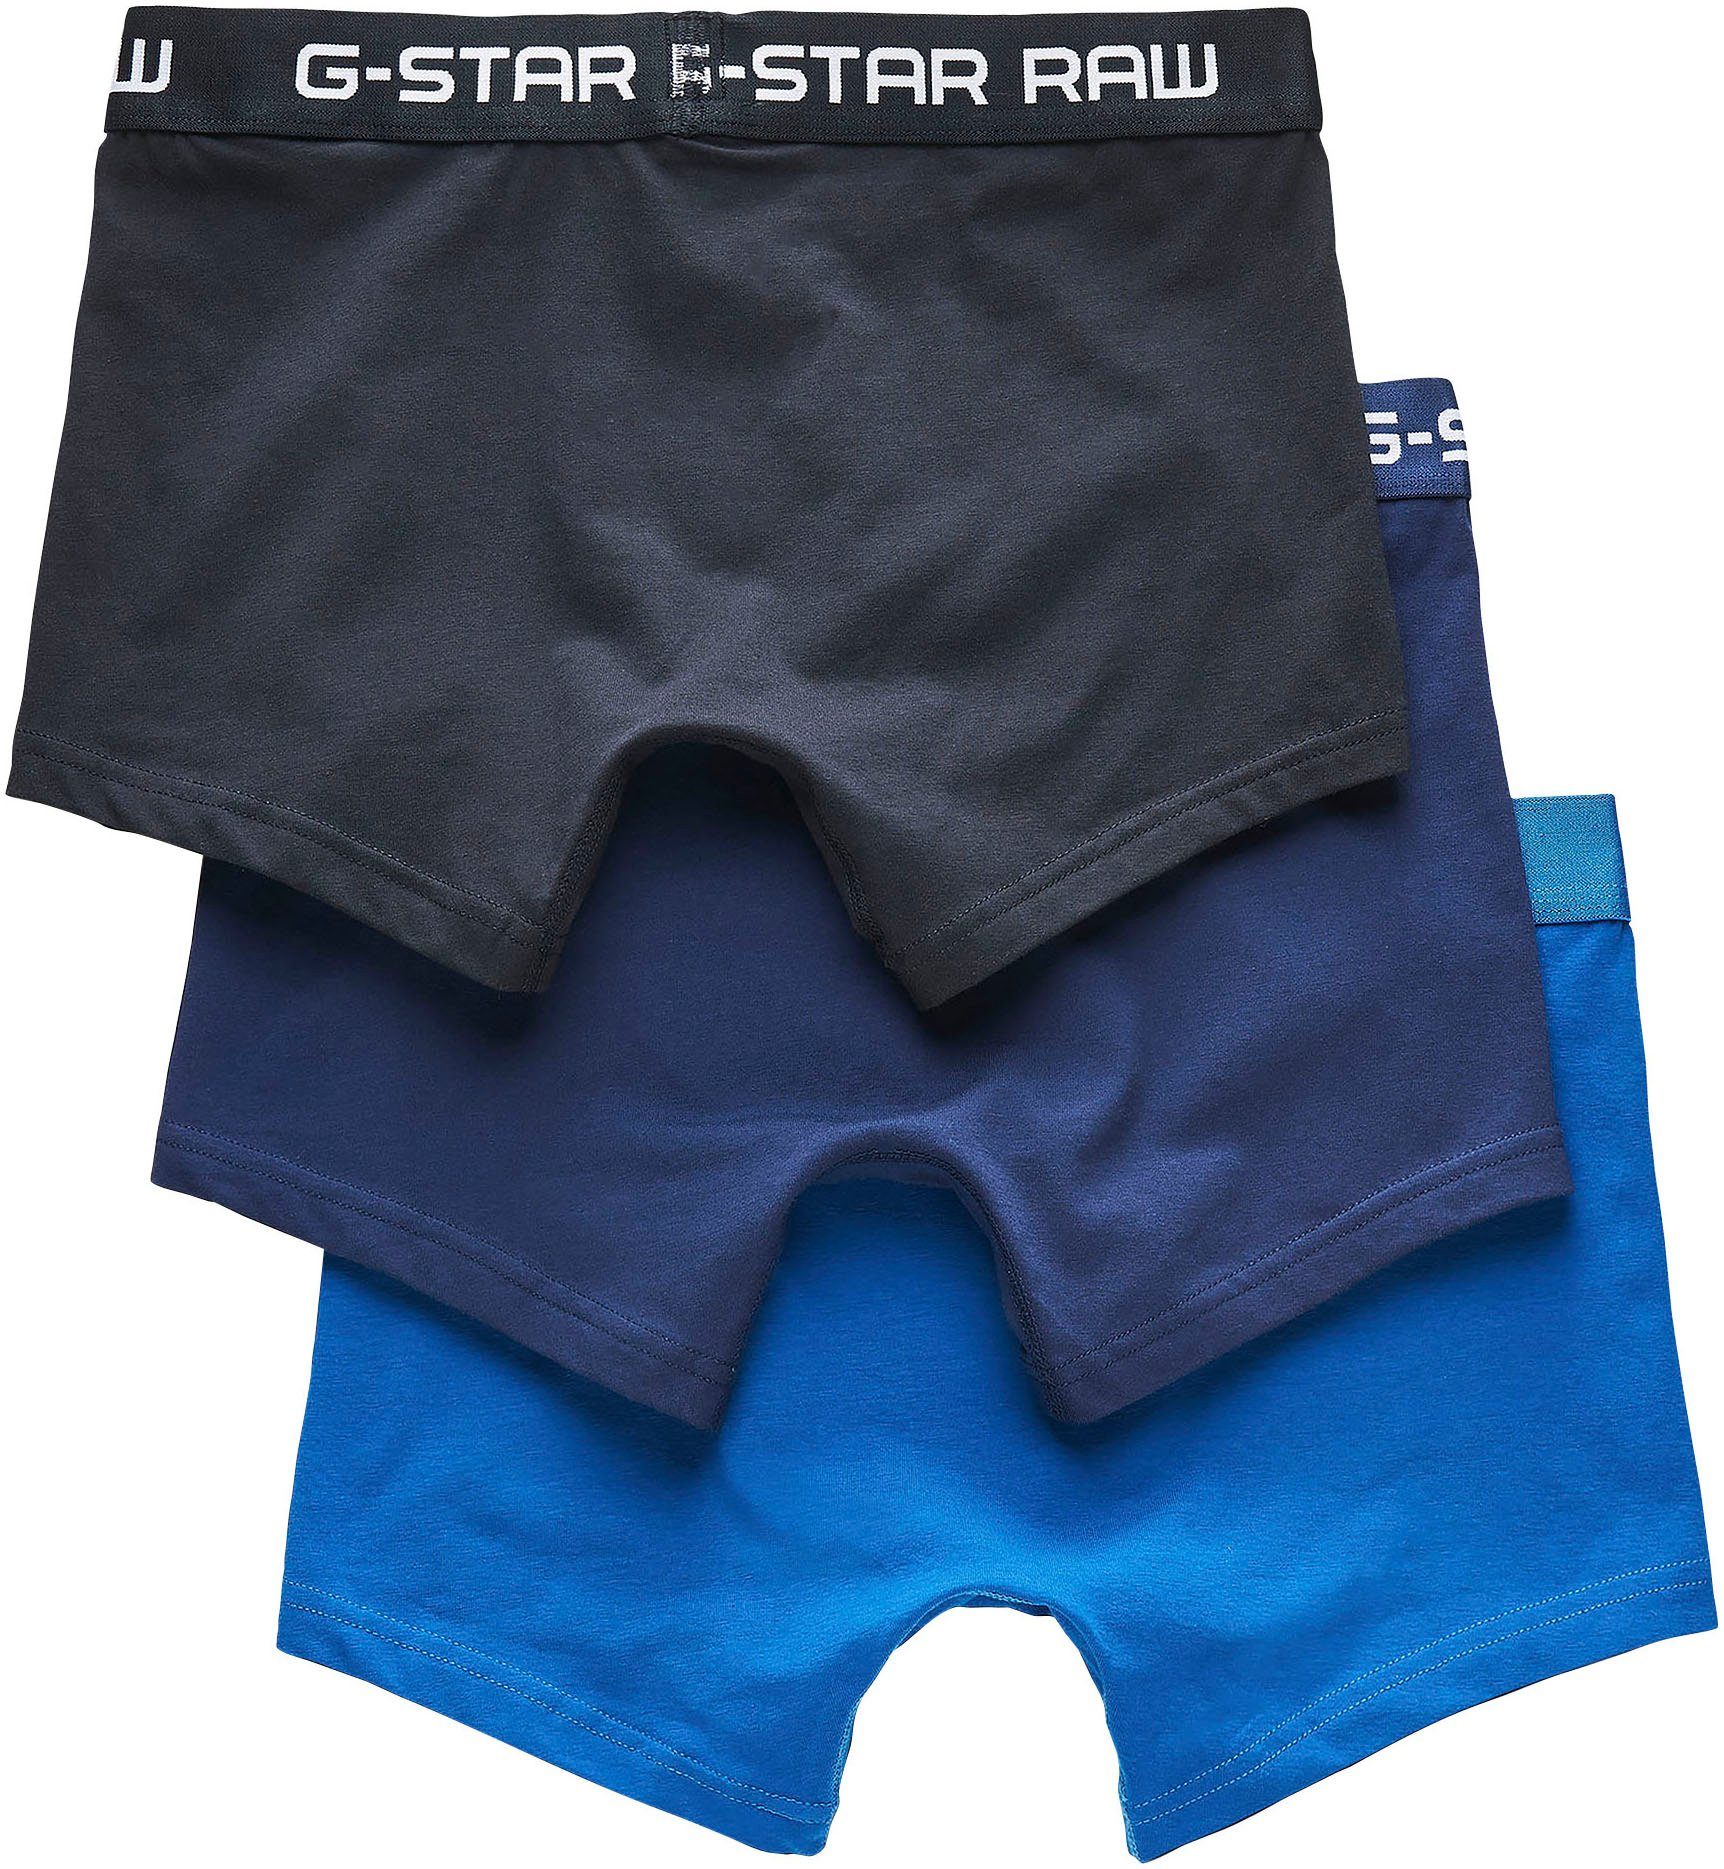 RAW blau, pack (Packung, Classic marine Boxer aquablau, 3er-Pack) 3 3-St., trunk G-Star clr